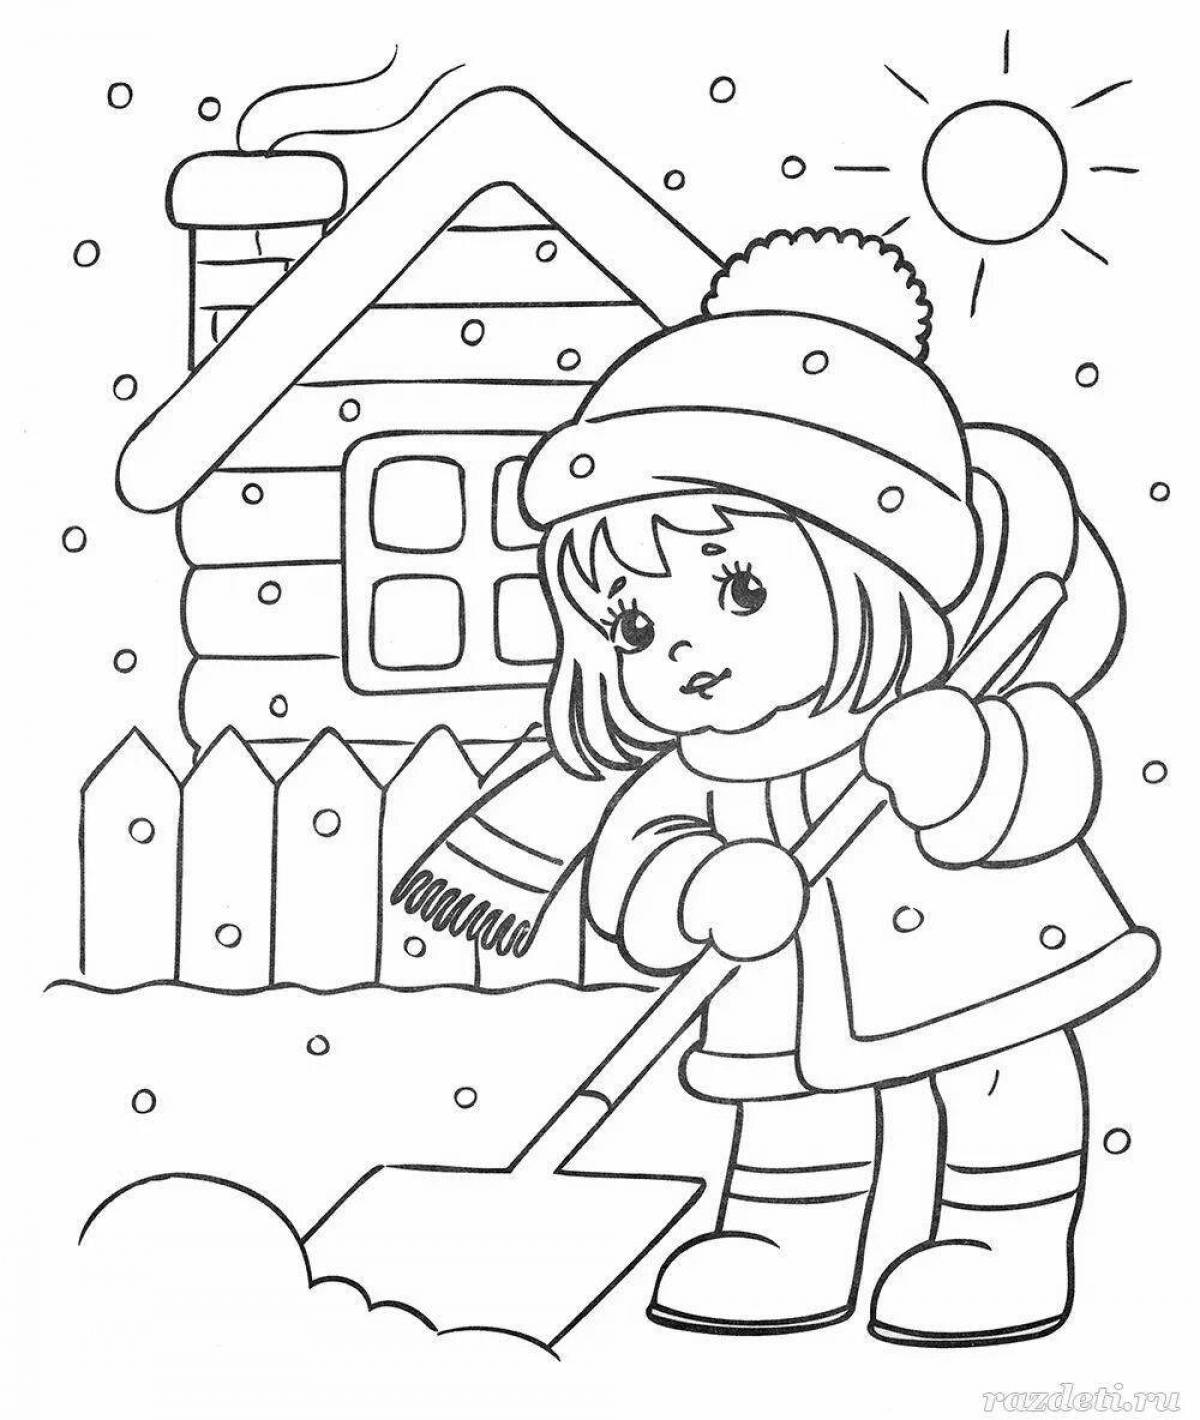 Colorful winter scene coloring page